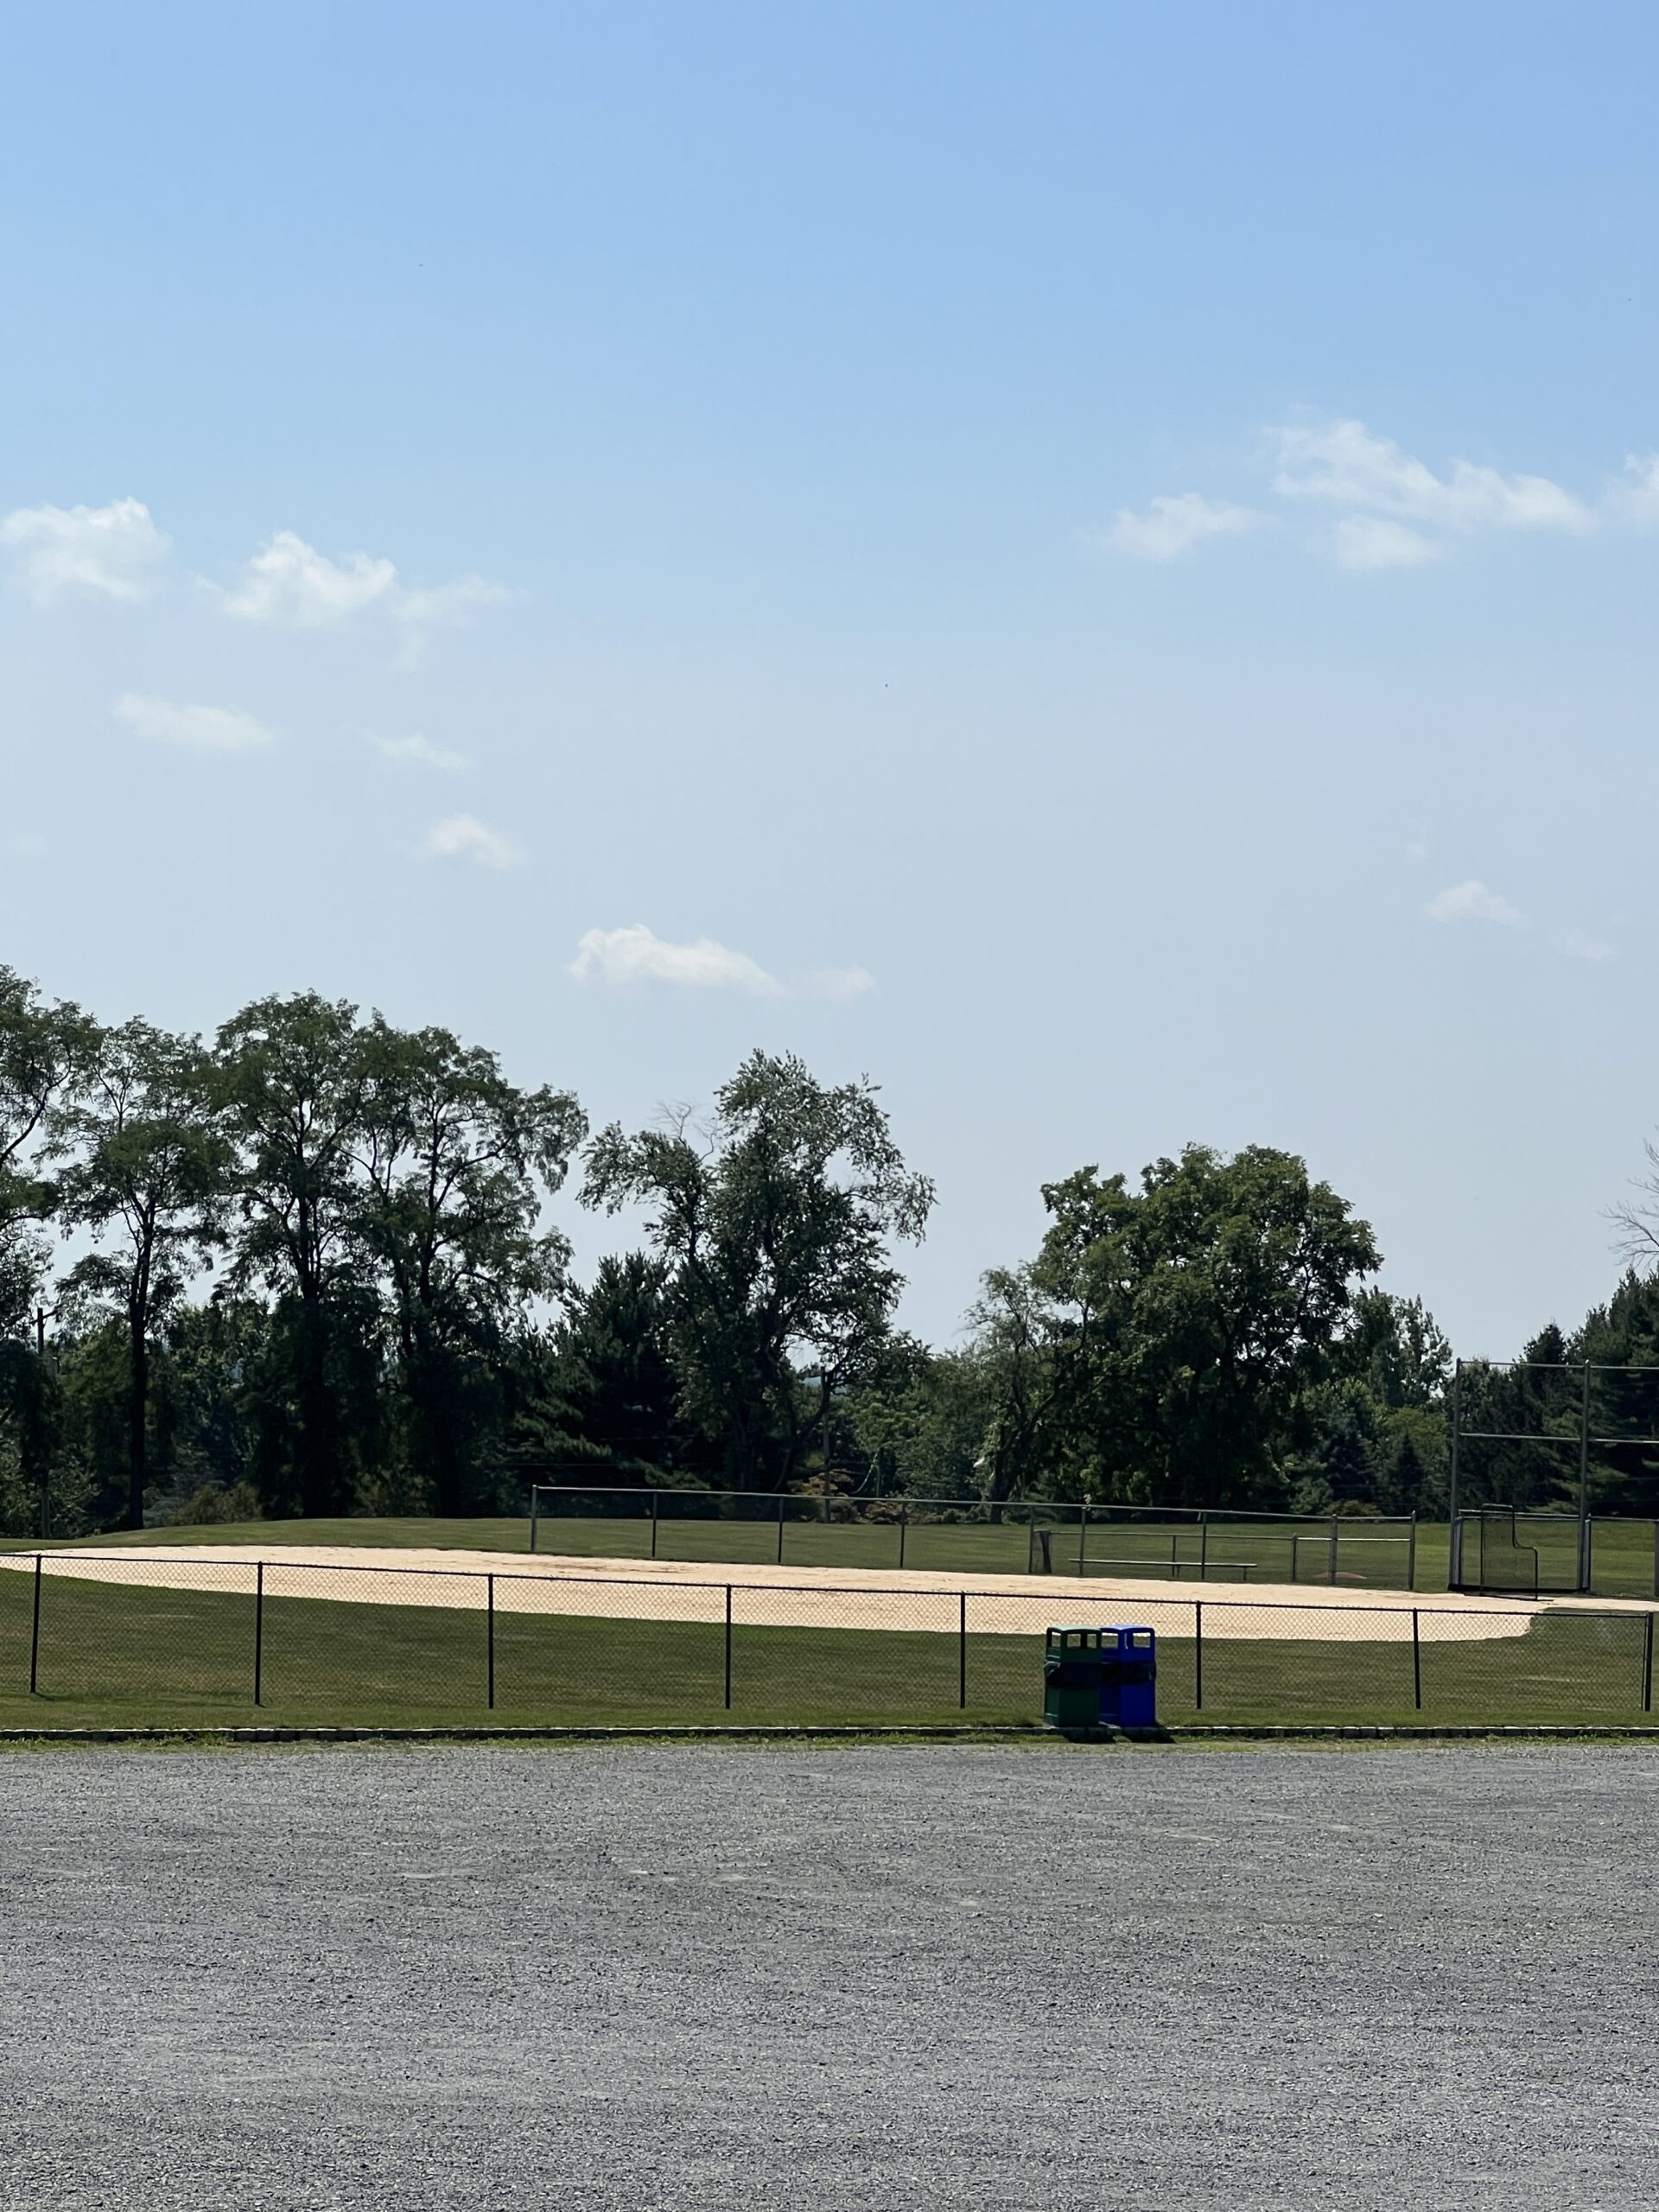 Alexandria Township Park in Milford NJ - Extras - baseball field TALL image